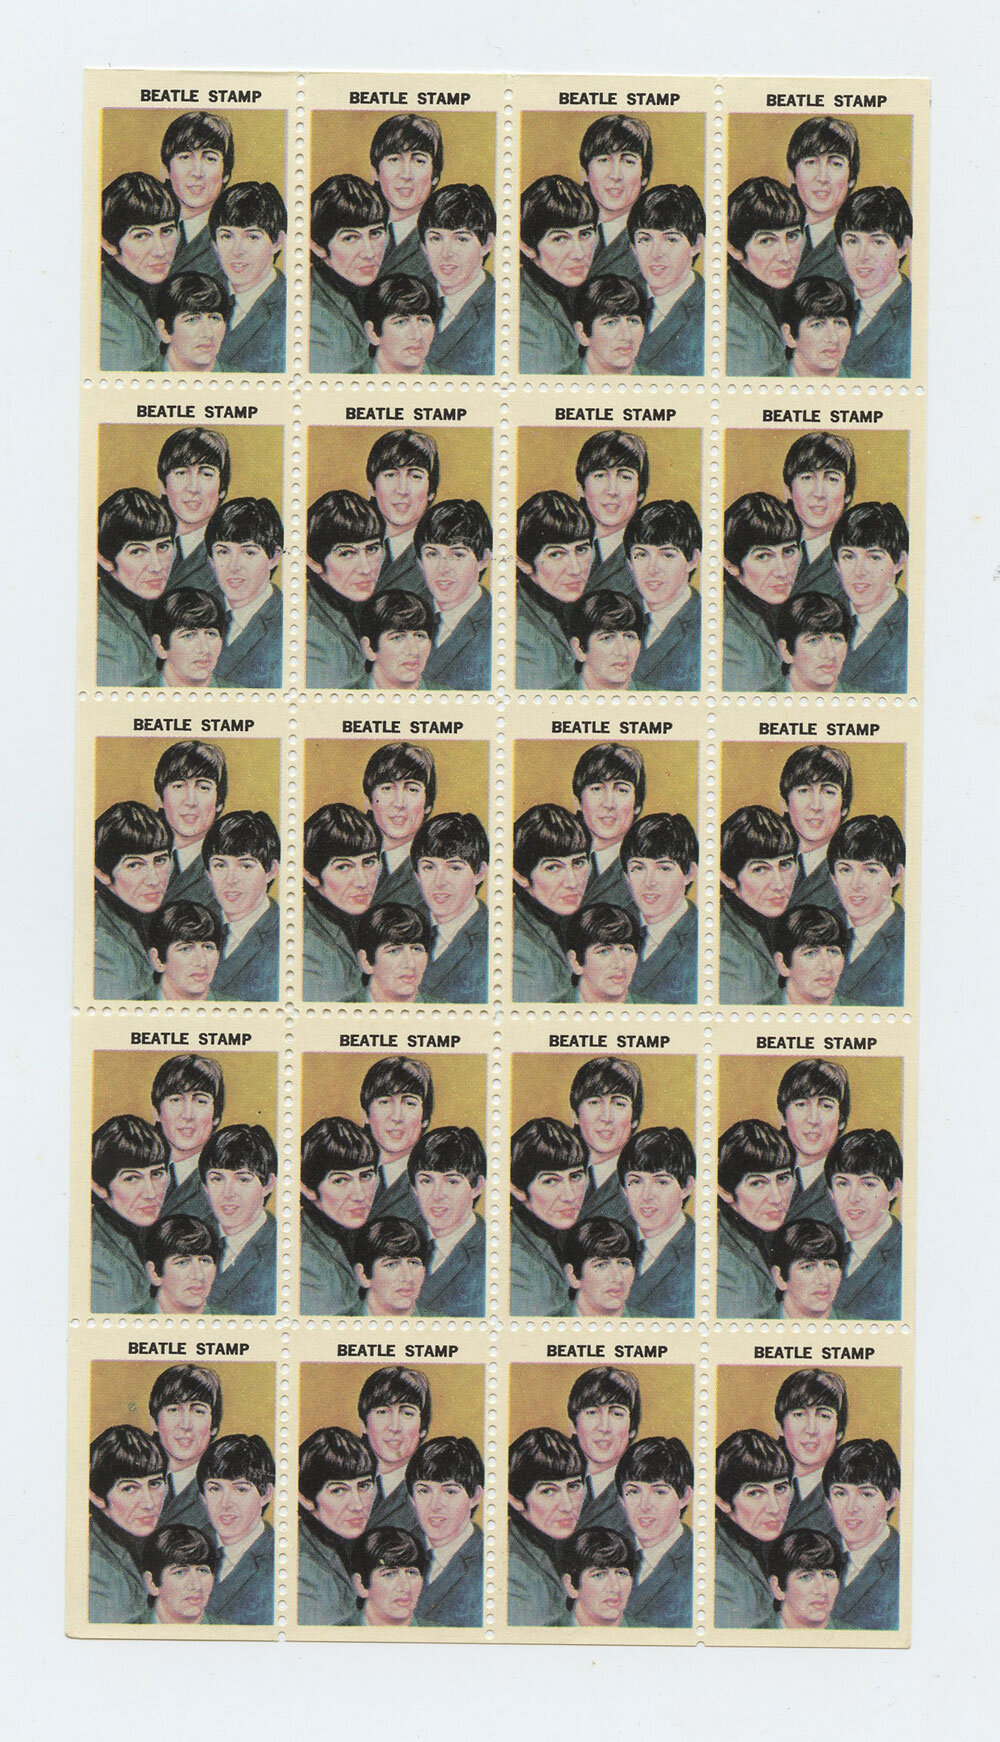 The Beatles Stamps 1964 Hallmark BEATLE STAMP 